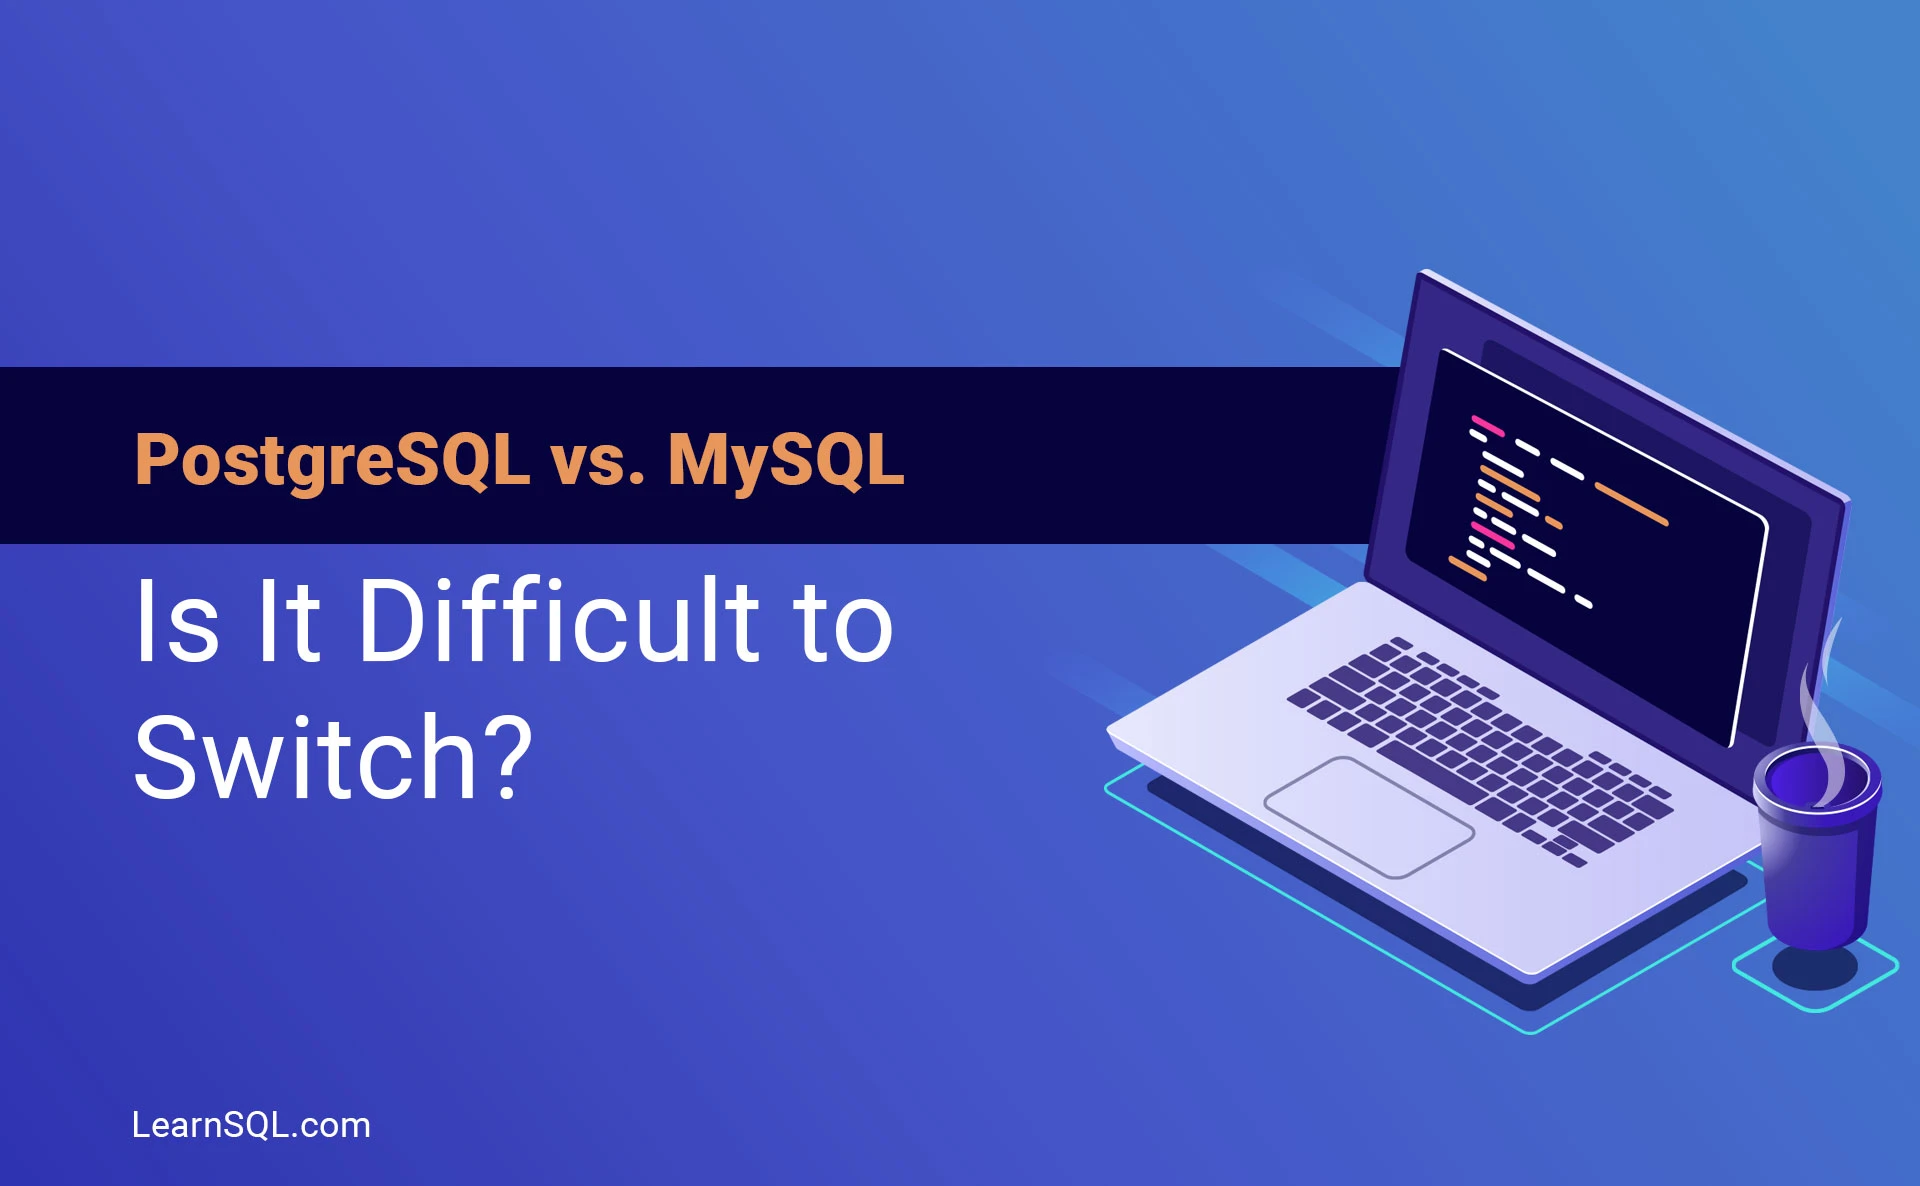 PostgreSQL vs. MySQL: How Difficult is it to Switch?